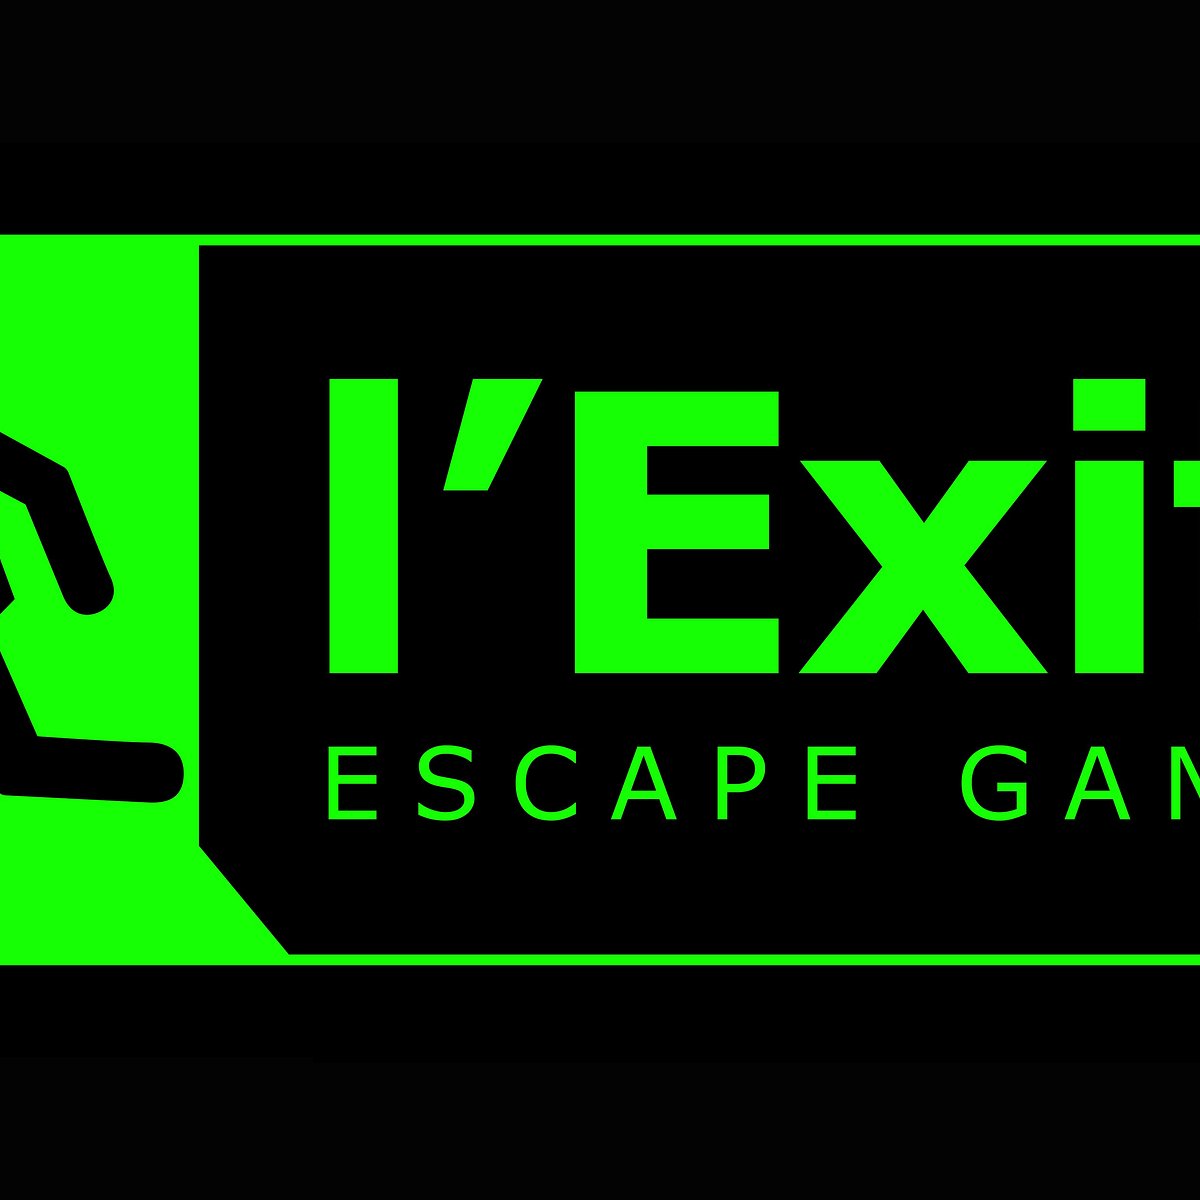 https://dynamic-media-cdn.tripadvisor.com/media/photo-o/17/ef/69/77/l-exit-escape-game-logo.jpg?w=1200&h=1200&s=1